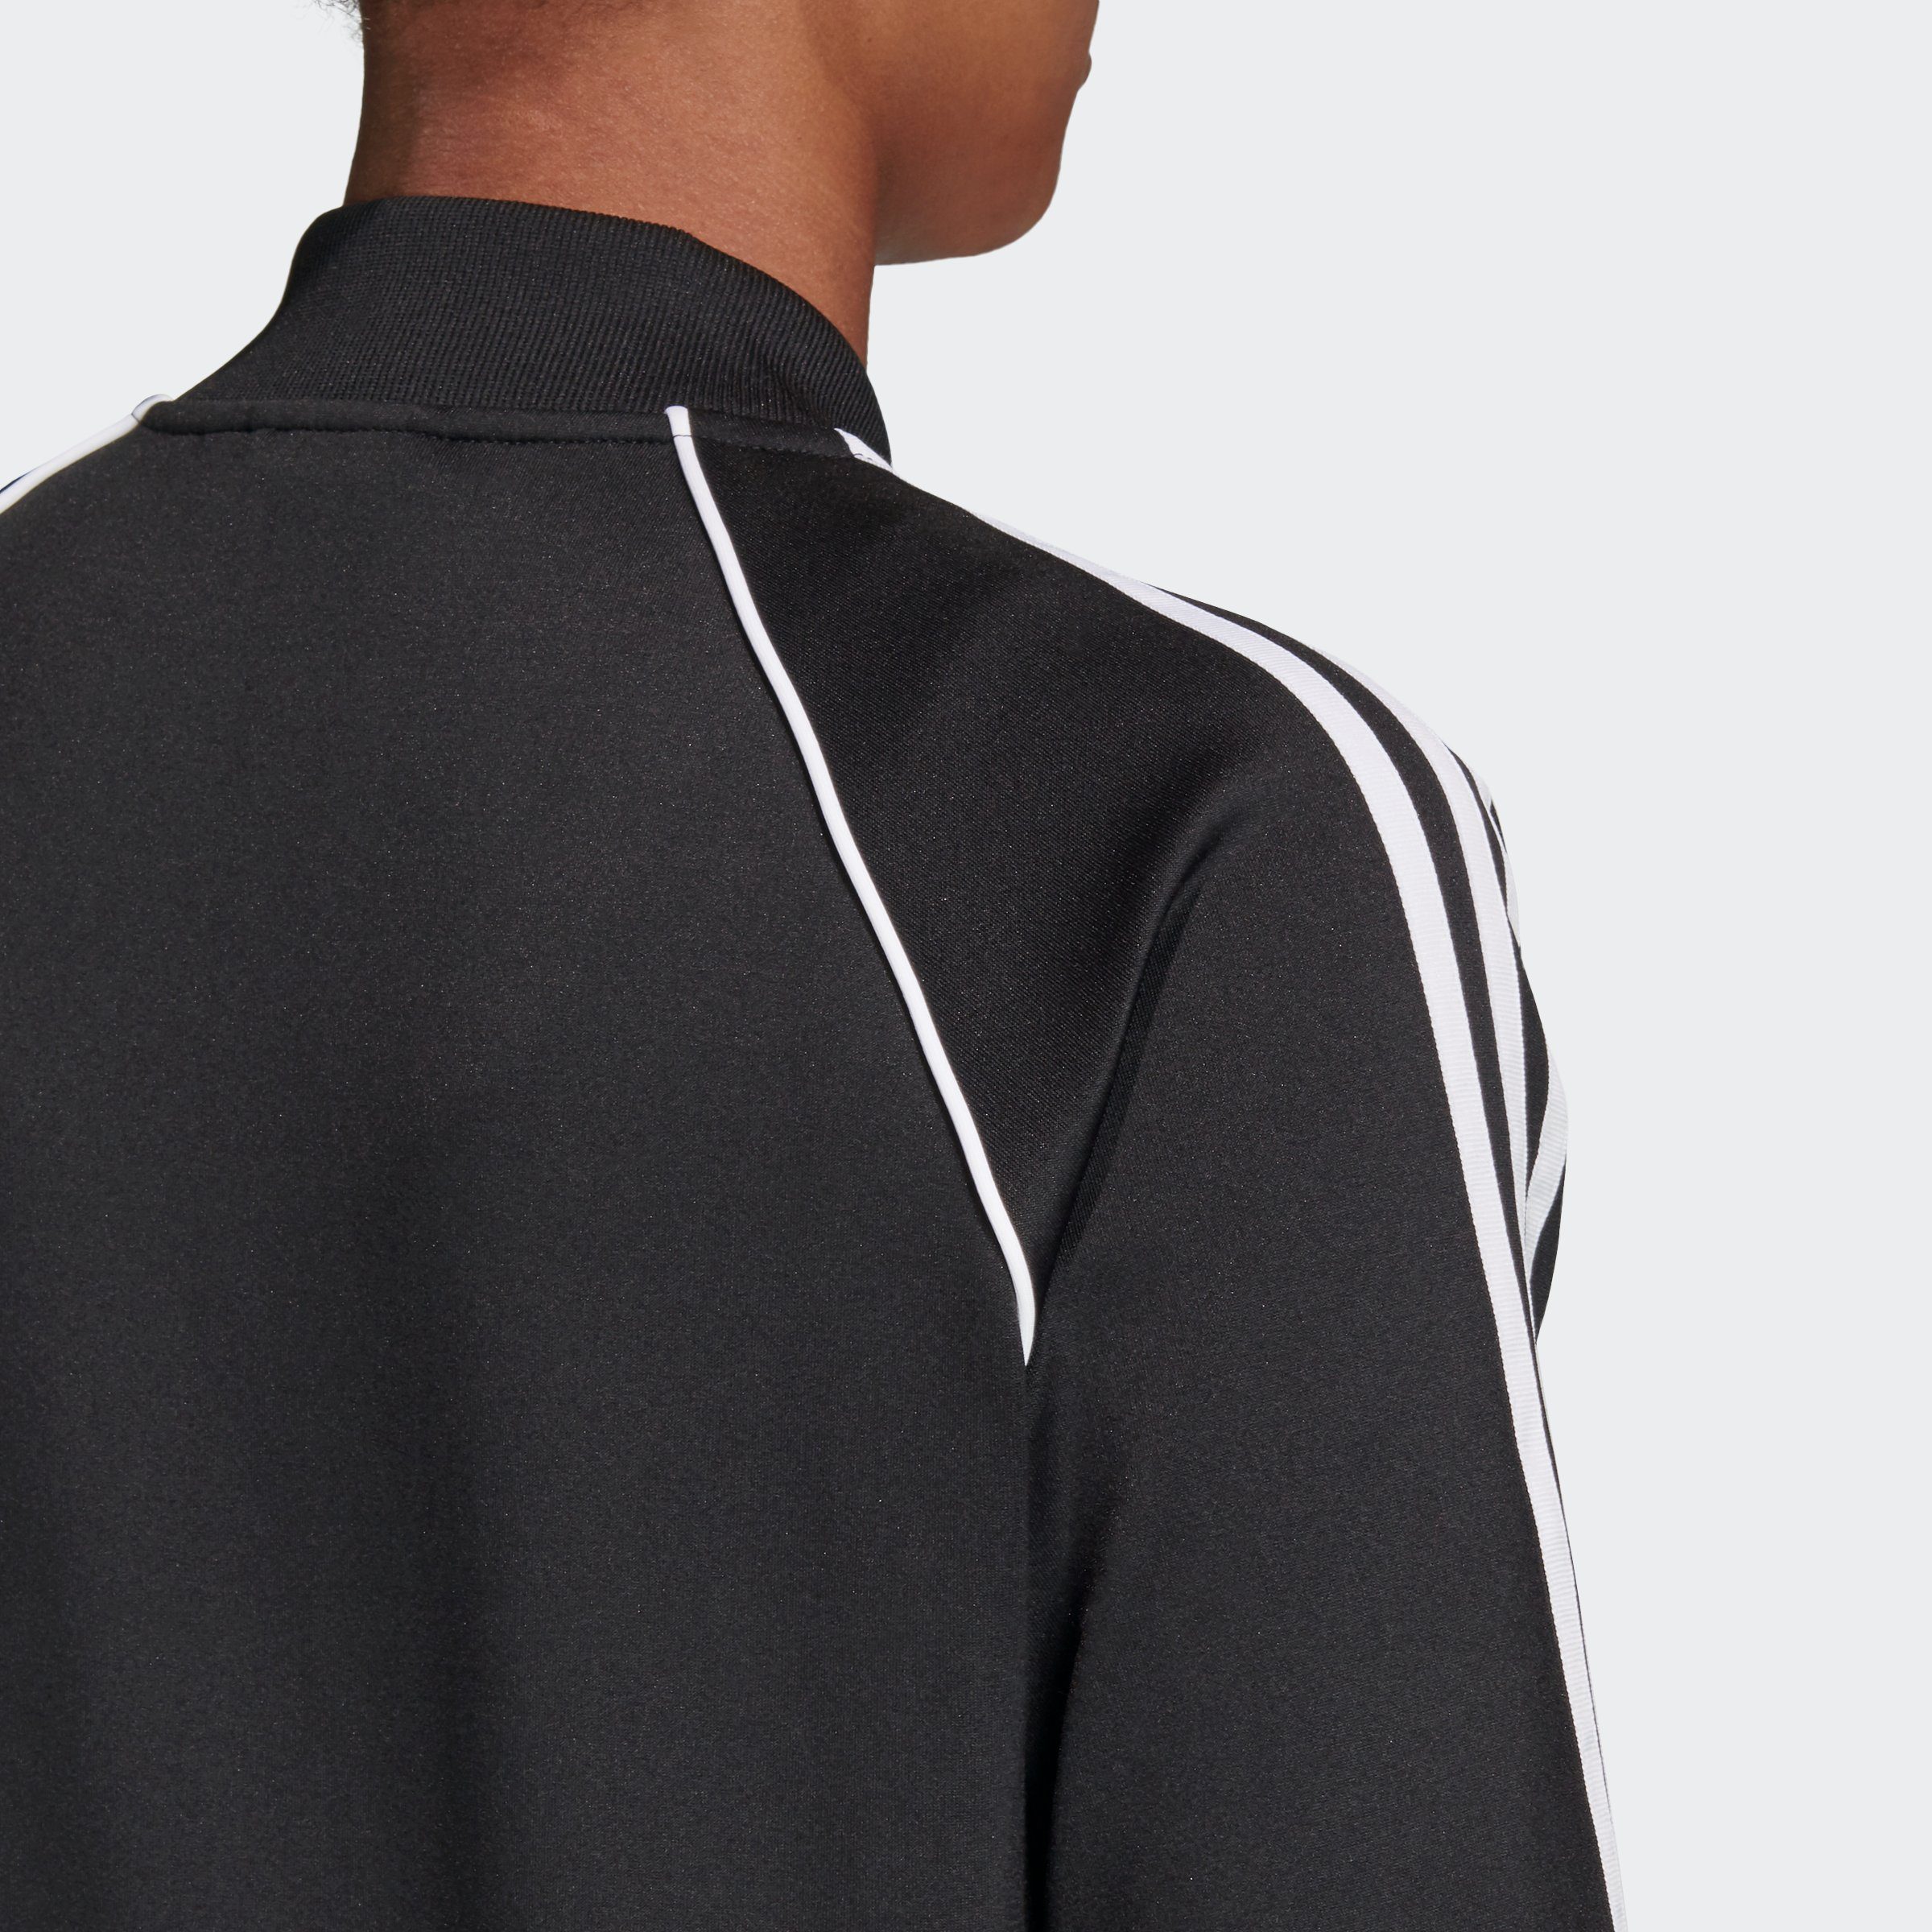 adidas SST BLACK/WHITE Originals ORIGINALS Trainingsjacke